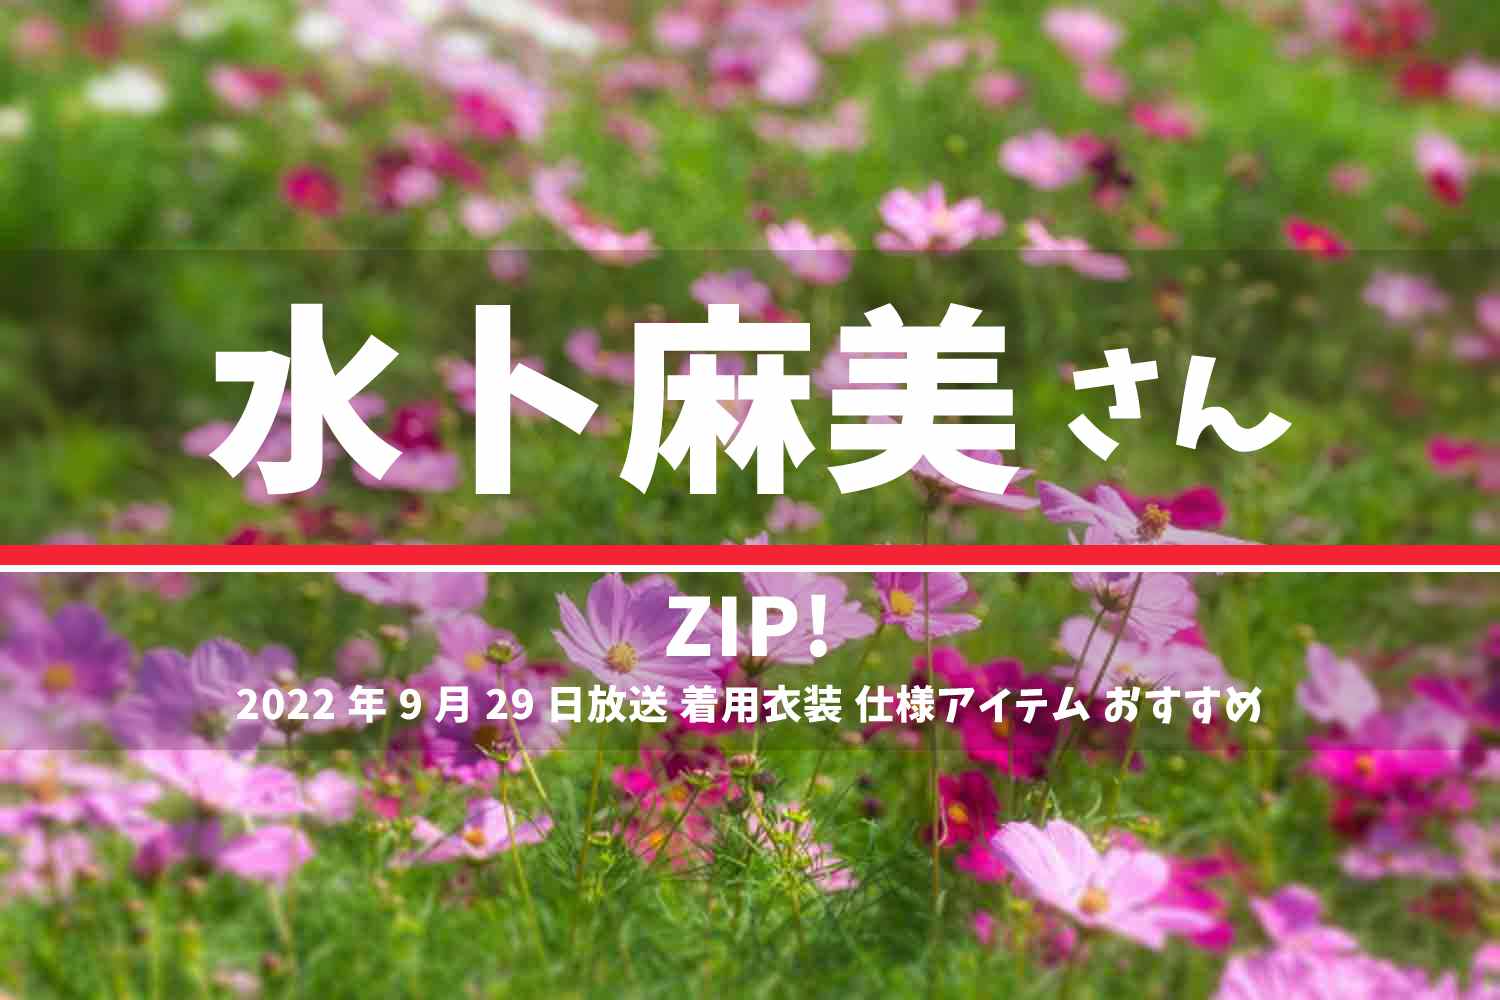 ZIP! 水卜麻美さん 番組 衣装 2022年9月29日放送